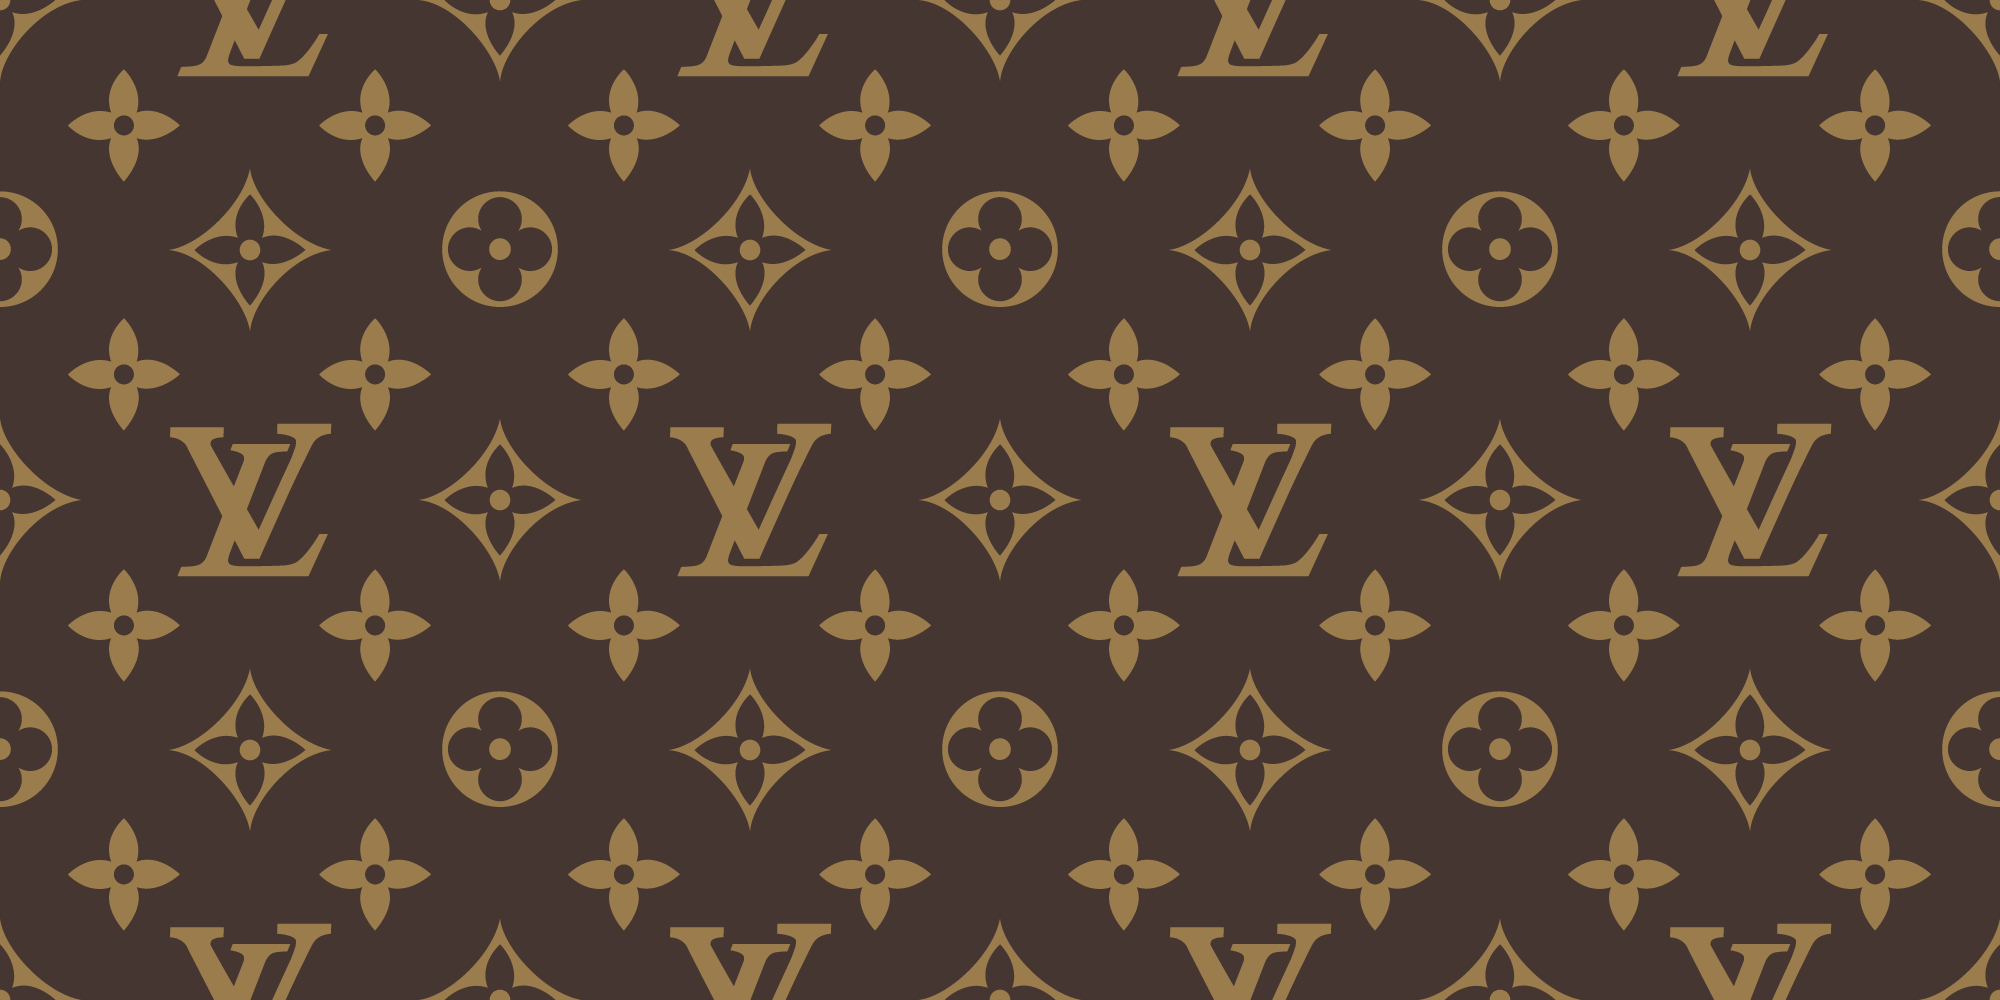 Lv monogram HD wallpapers